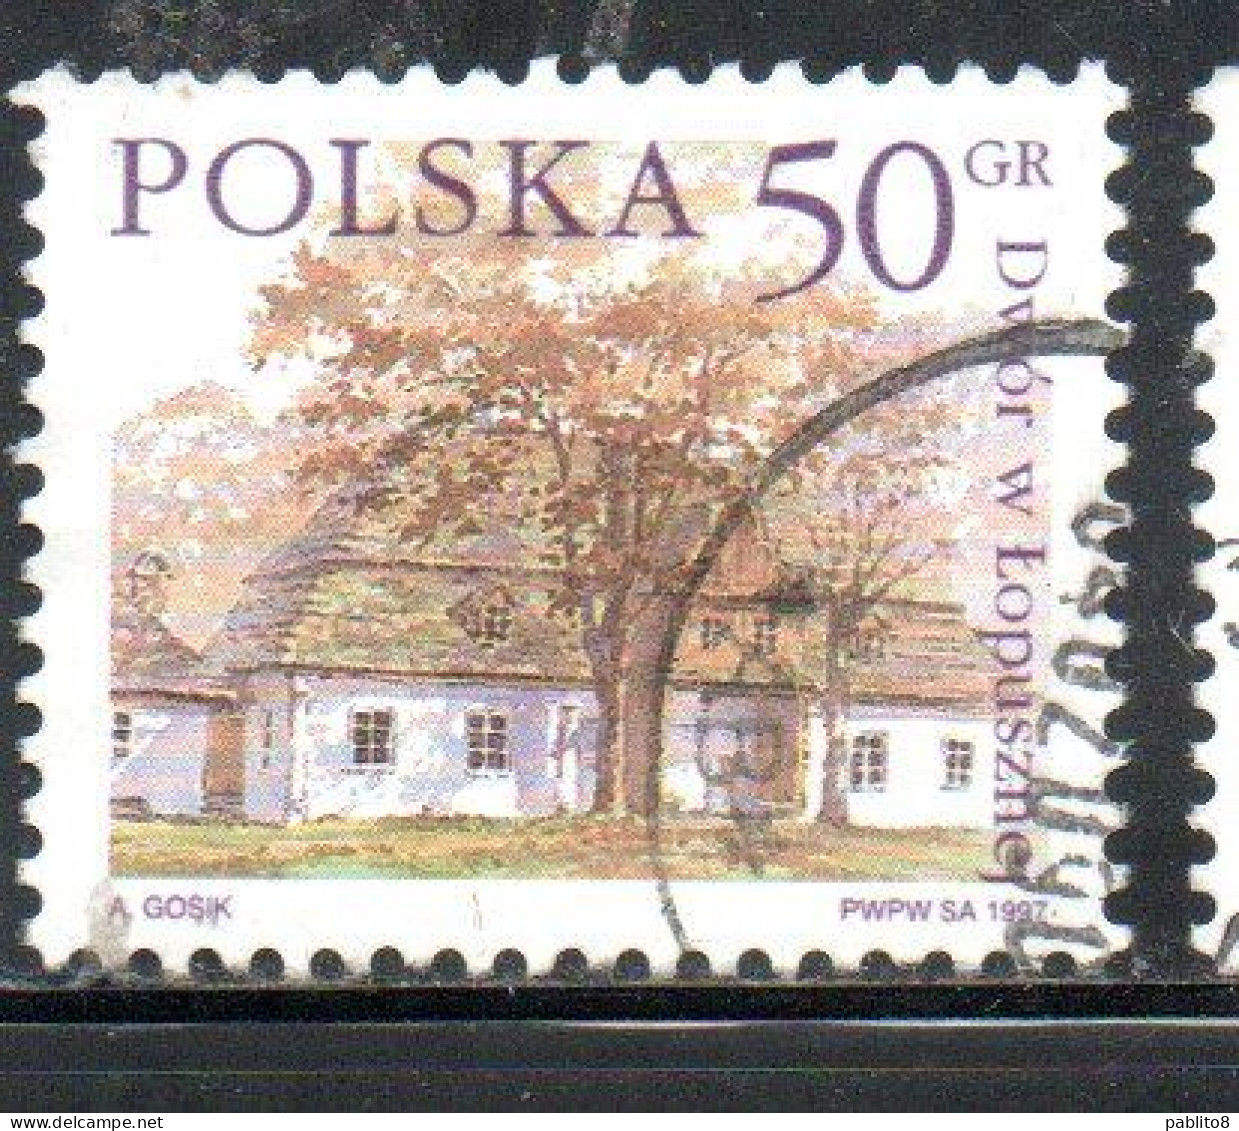 POLONIA POLAND POLSKA 1997 COUNTRY ESTATES LOPUSZNEJ 50g USED USATO OBLITERE' - Gebruikt